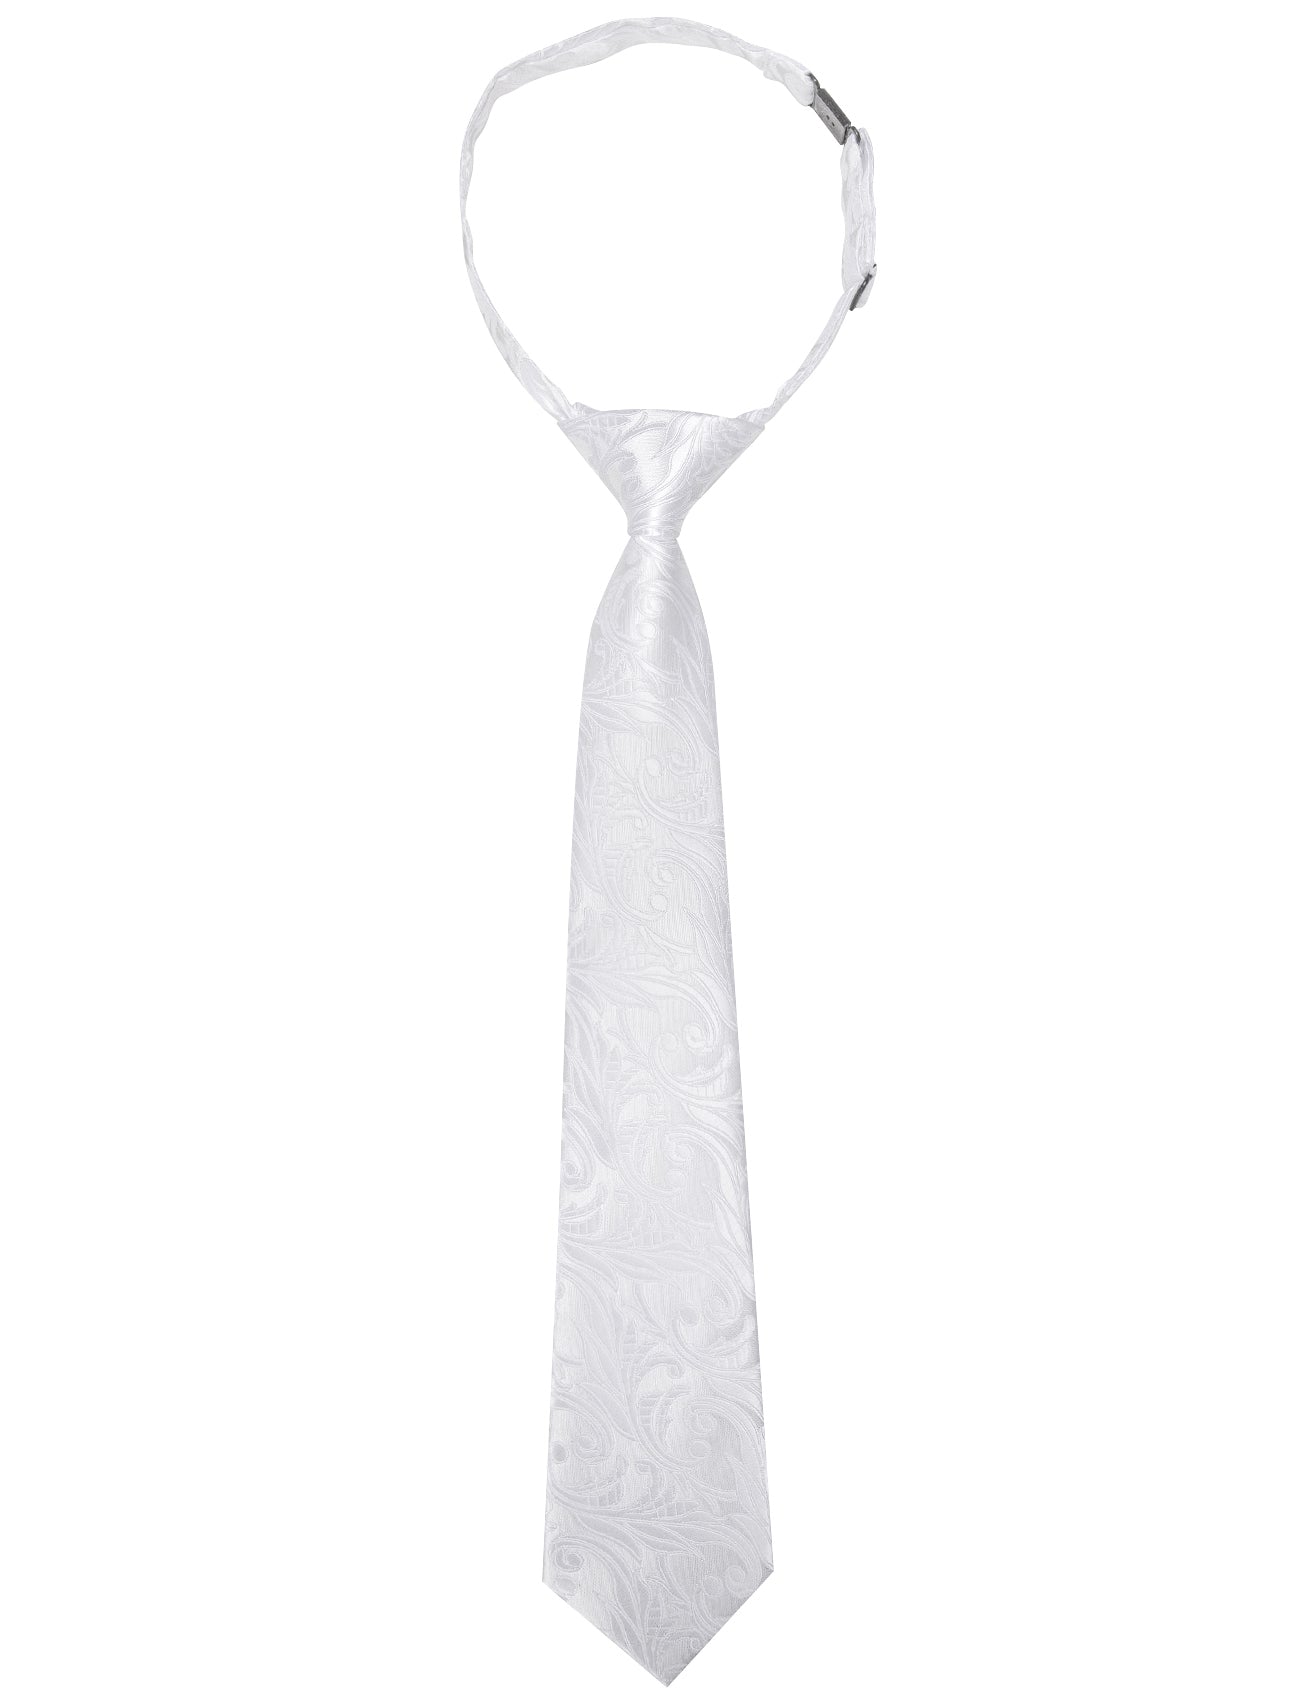 Barry.wang Floral Tie White Jacquard Children's Tie Handkerchief Set